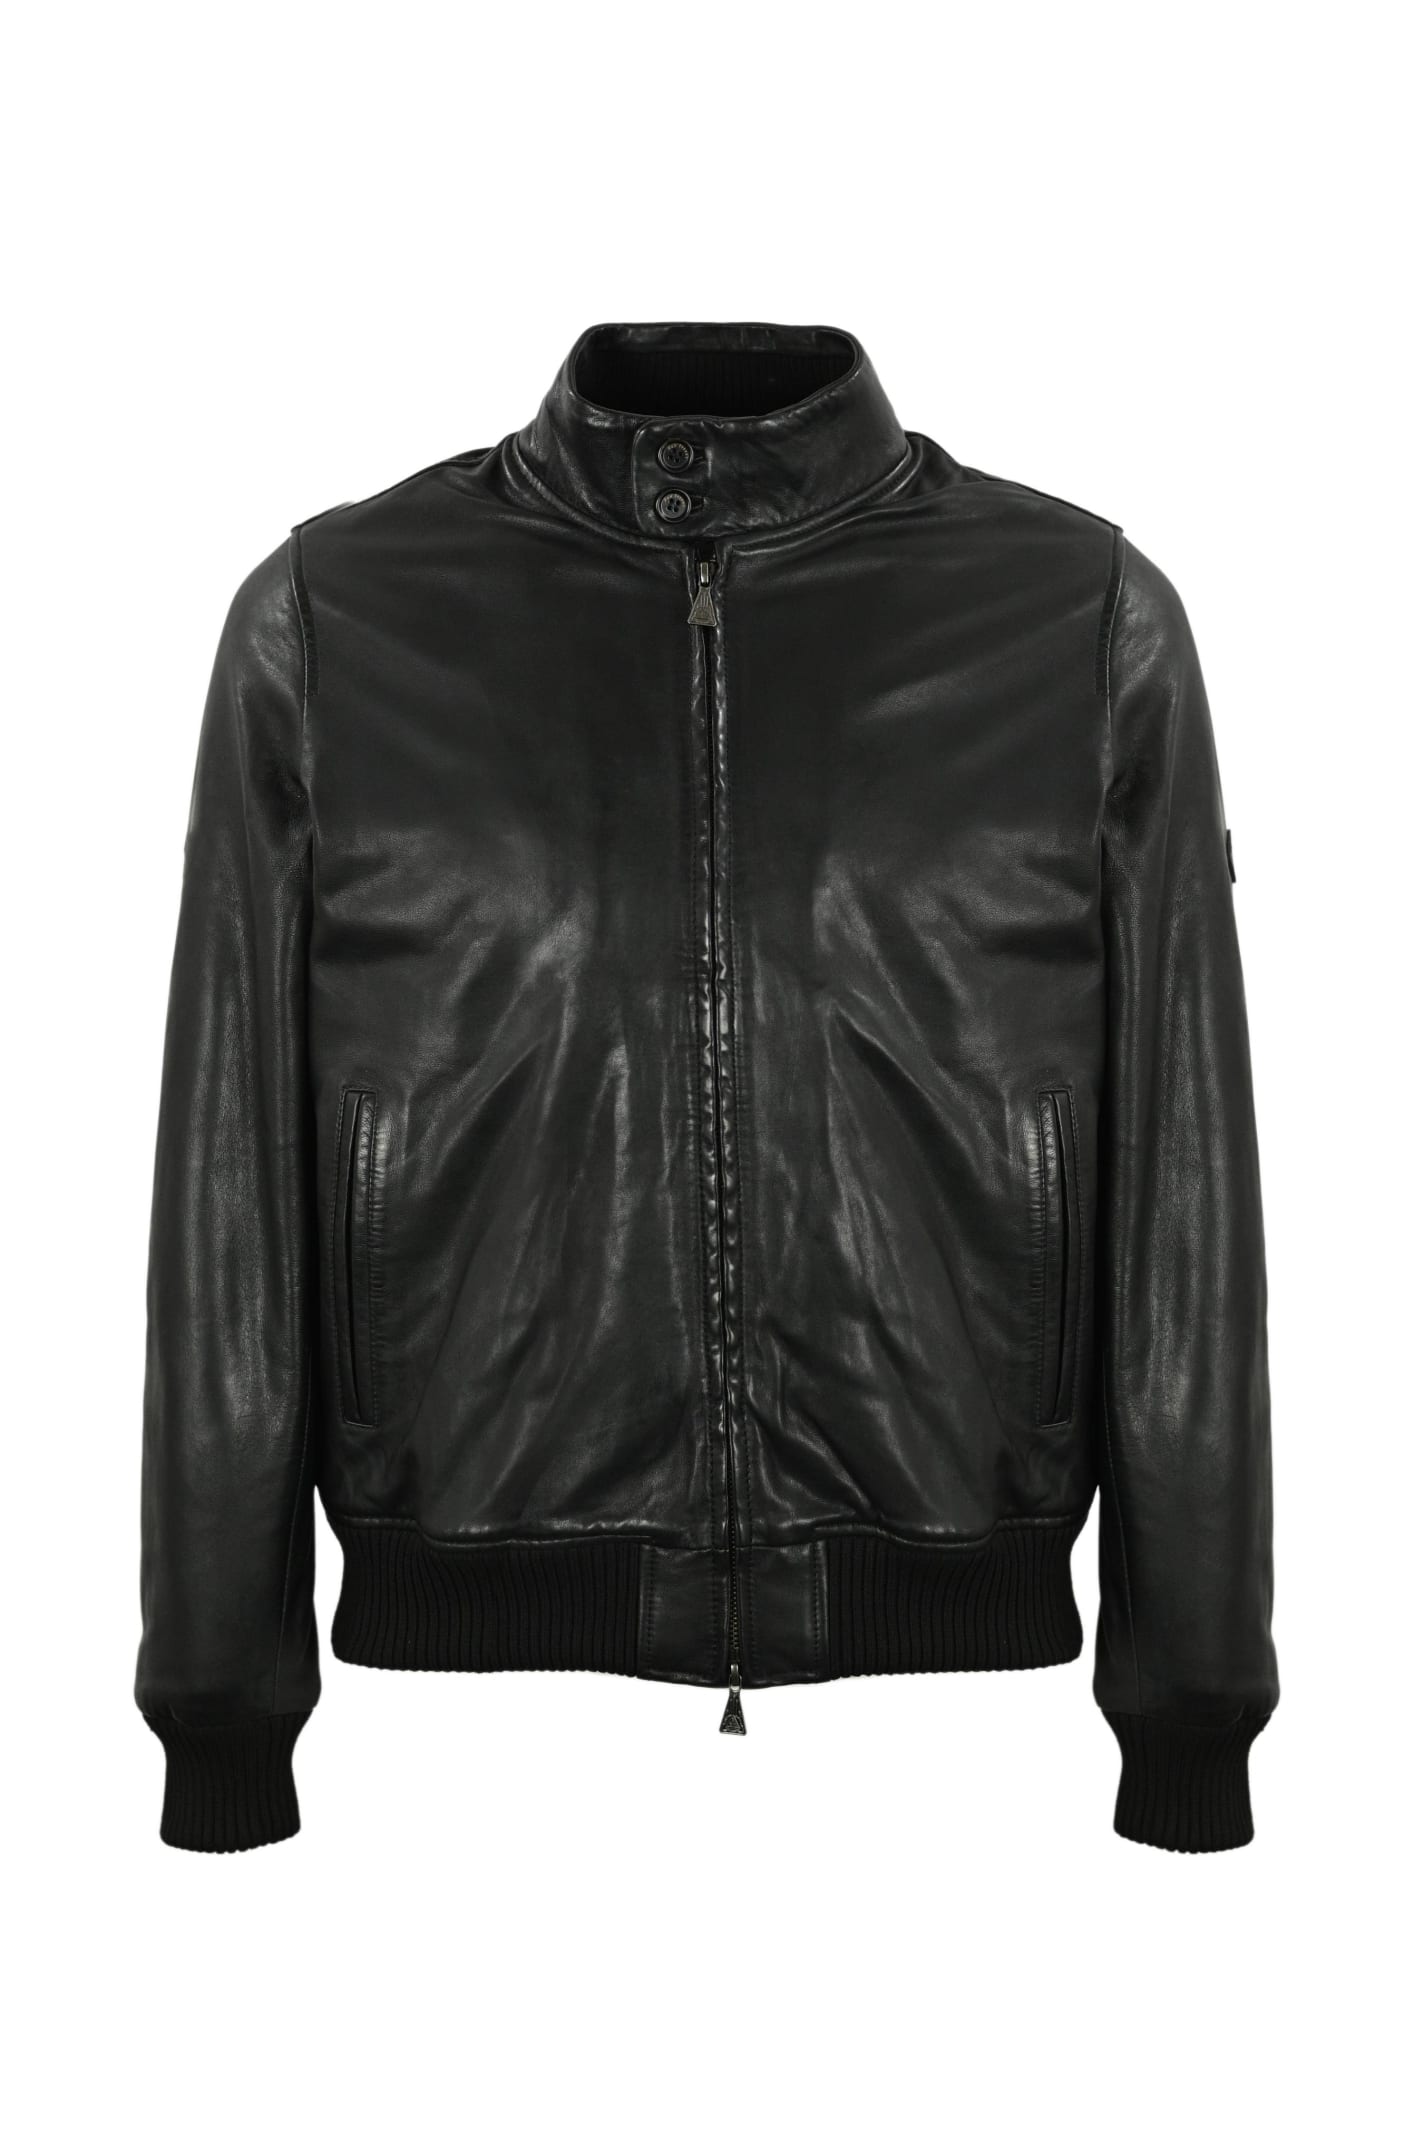 Roy Rogers Leather Jacket